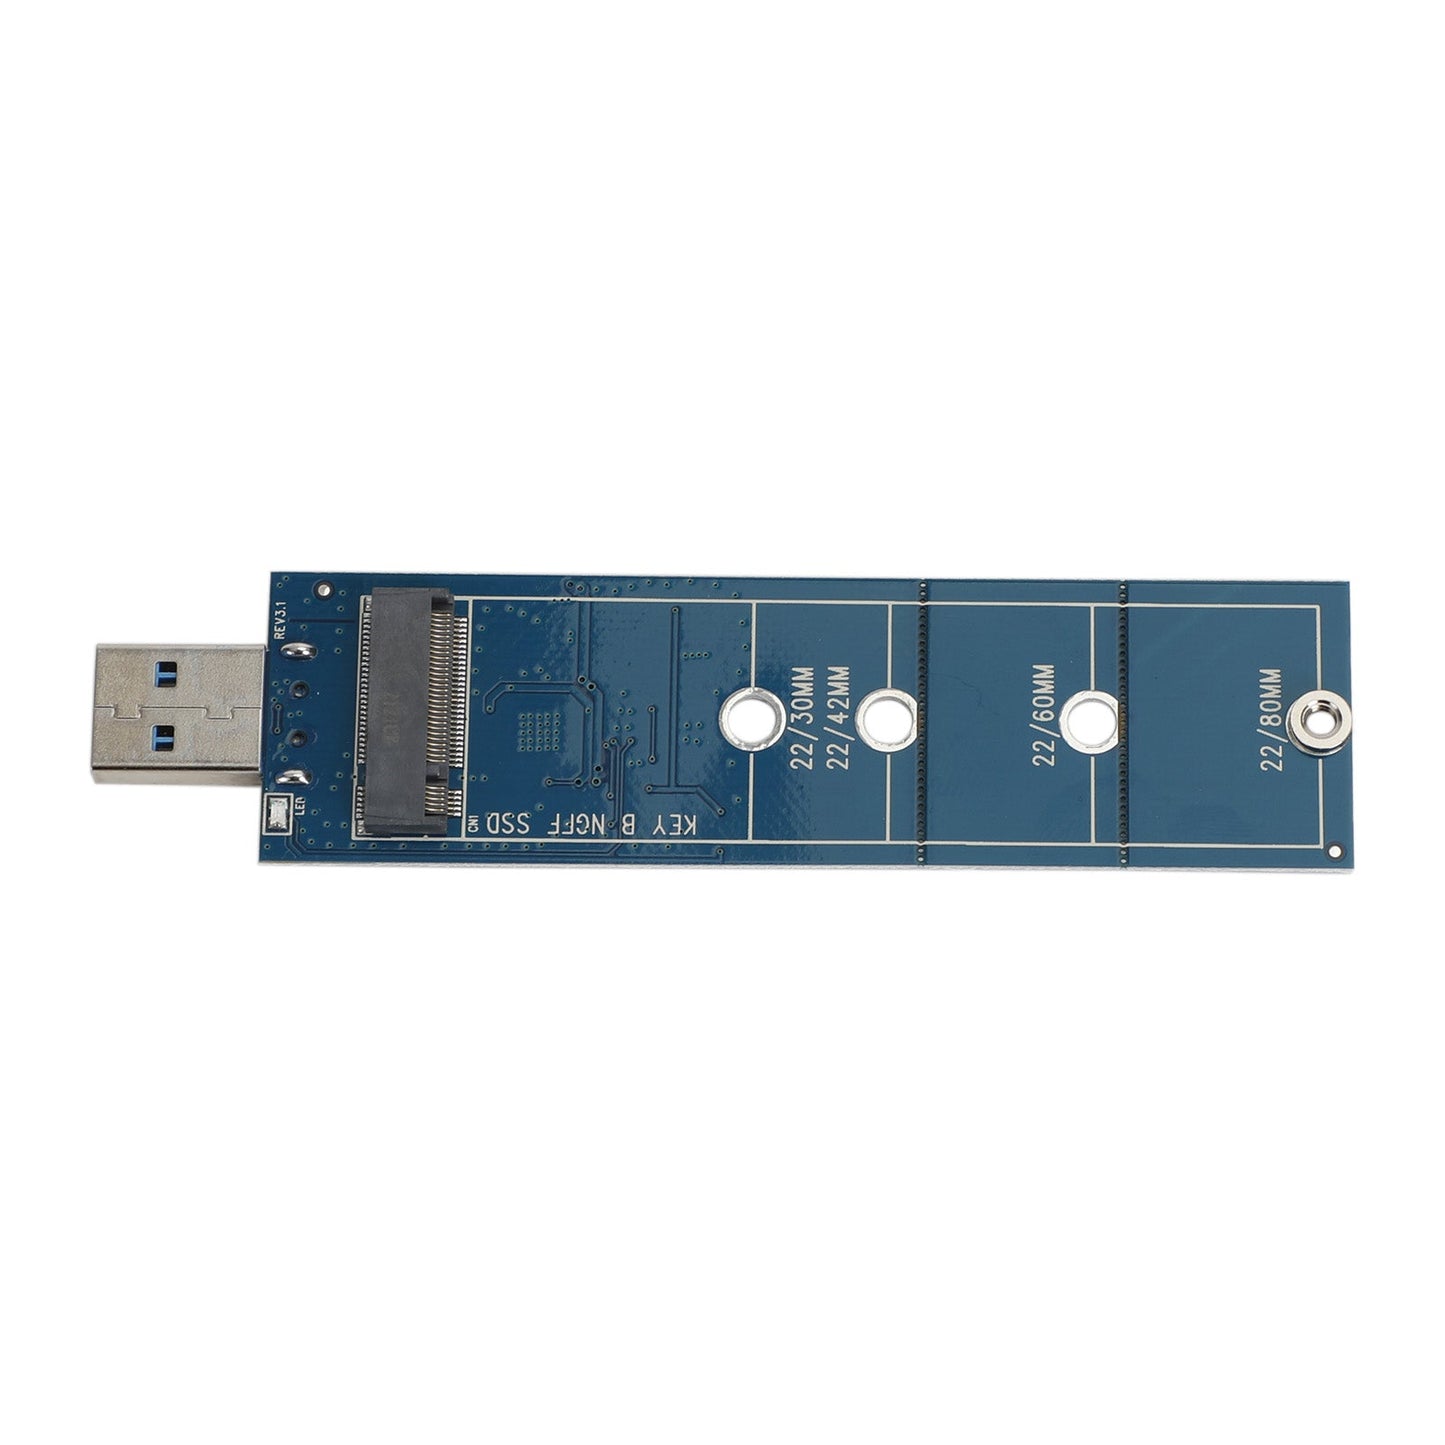 SSD M2 to USB M.2 NGFF SATA SSD B Key to USB 3.0 Adapter for Windows MAC OS